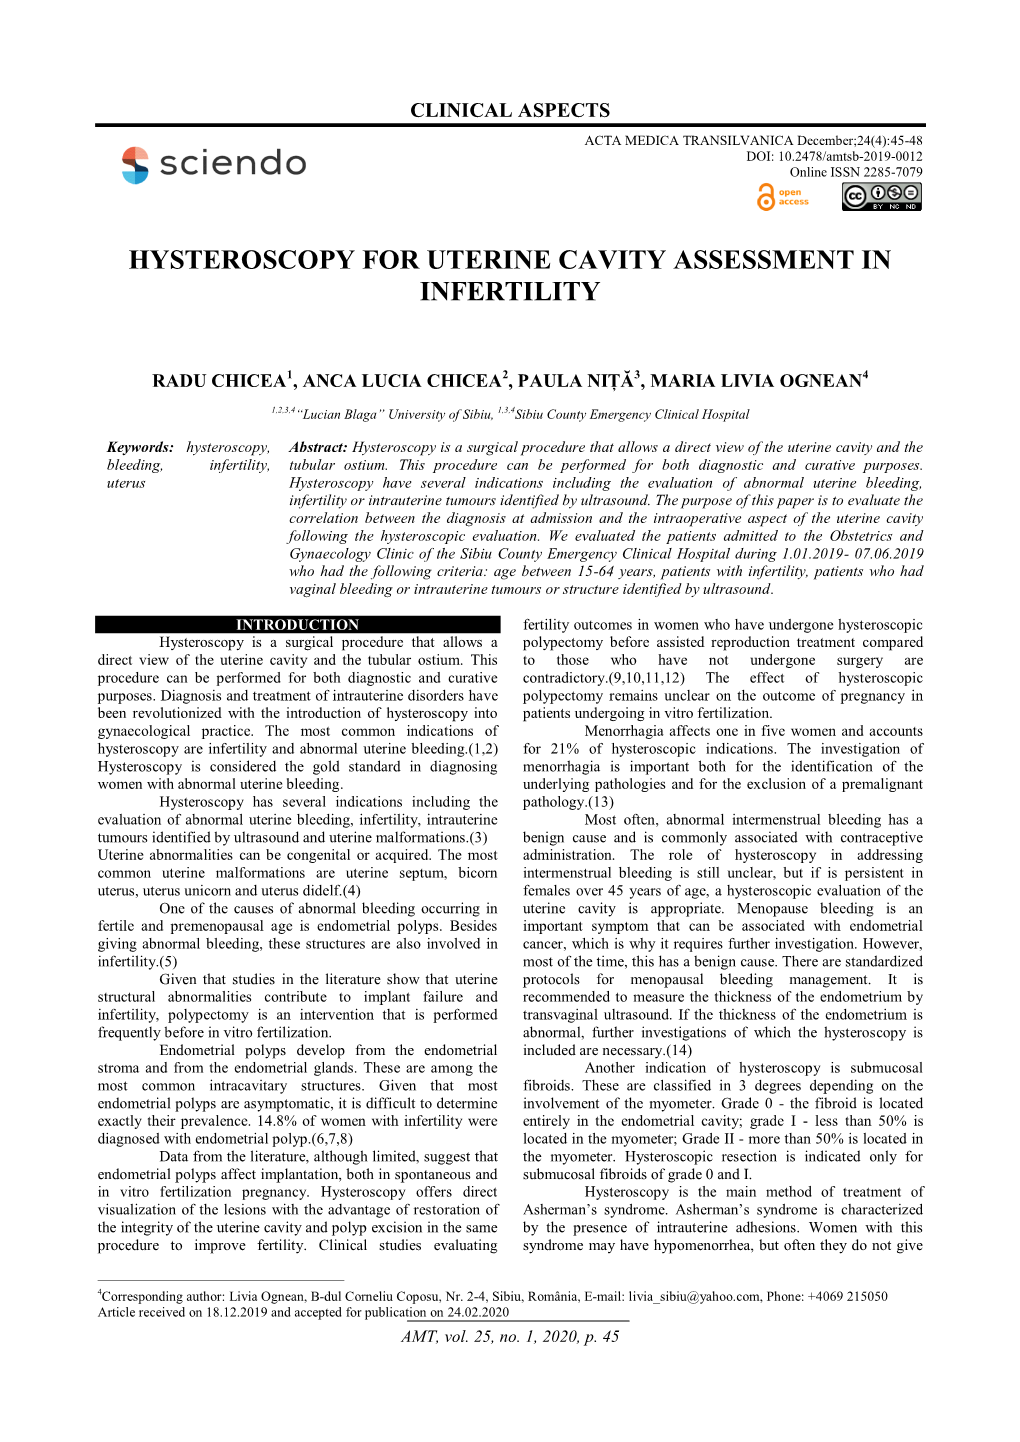 Hysteroscopy for Uterine Cavity Assessment in Infertility